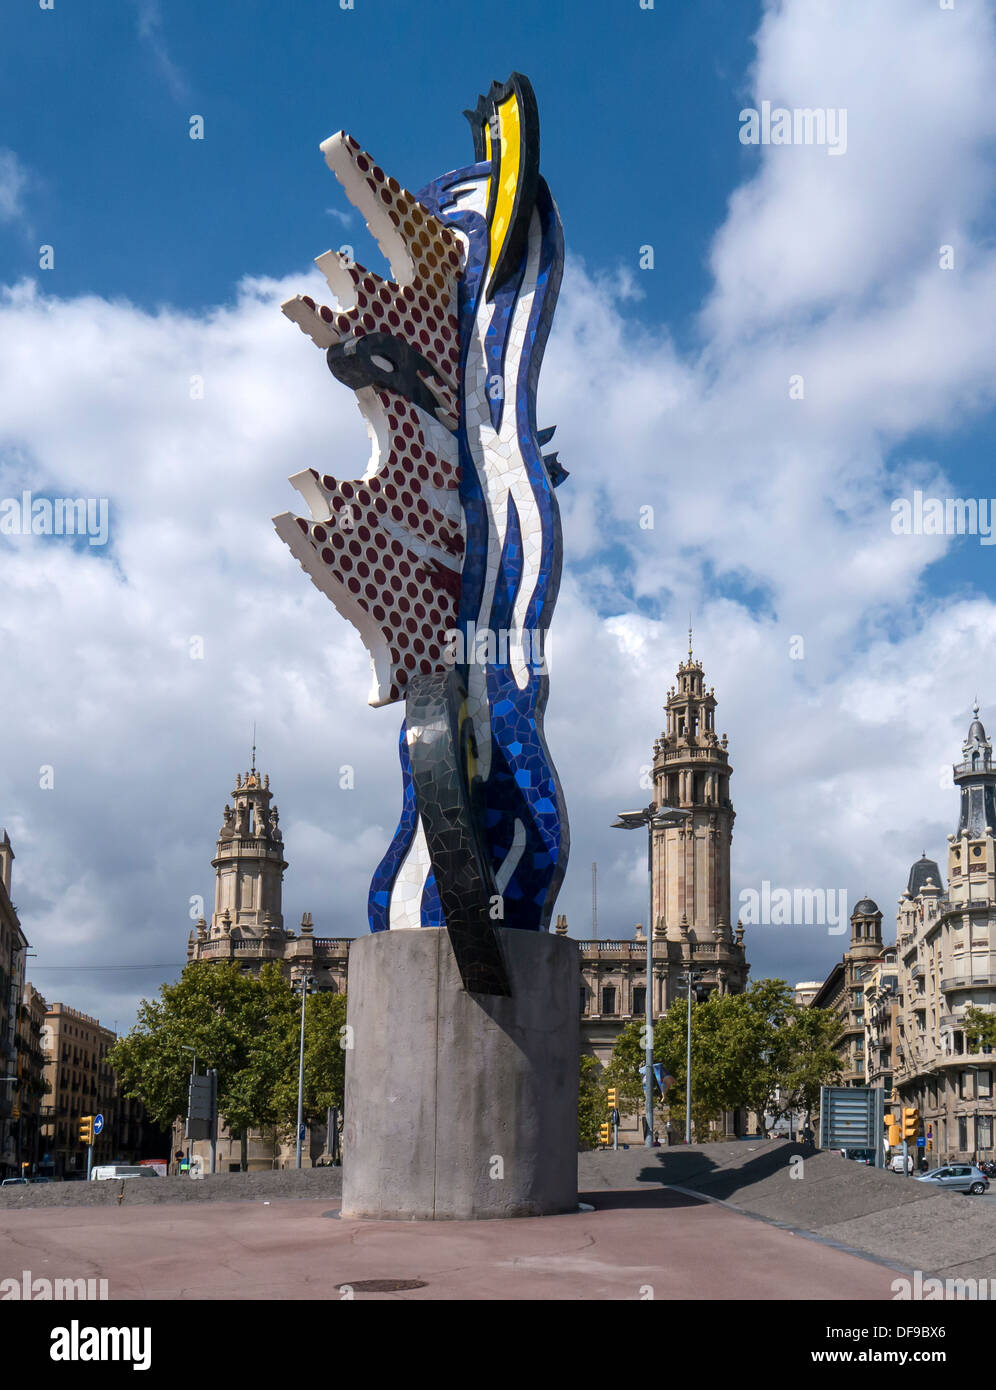 BARCELONA, SPAIN - SEPTEMBER 12, 2013: The El Cap de Barcelona sculpture in Port Vell Stock Photo